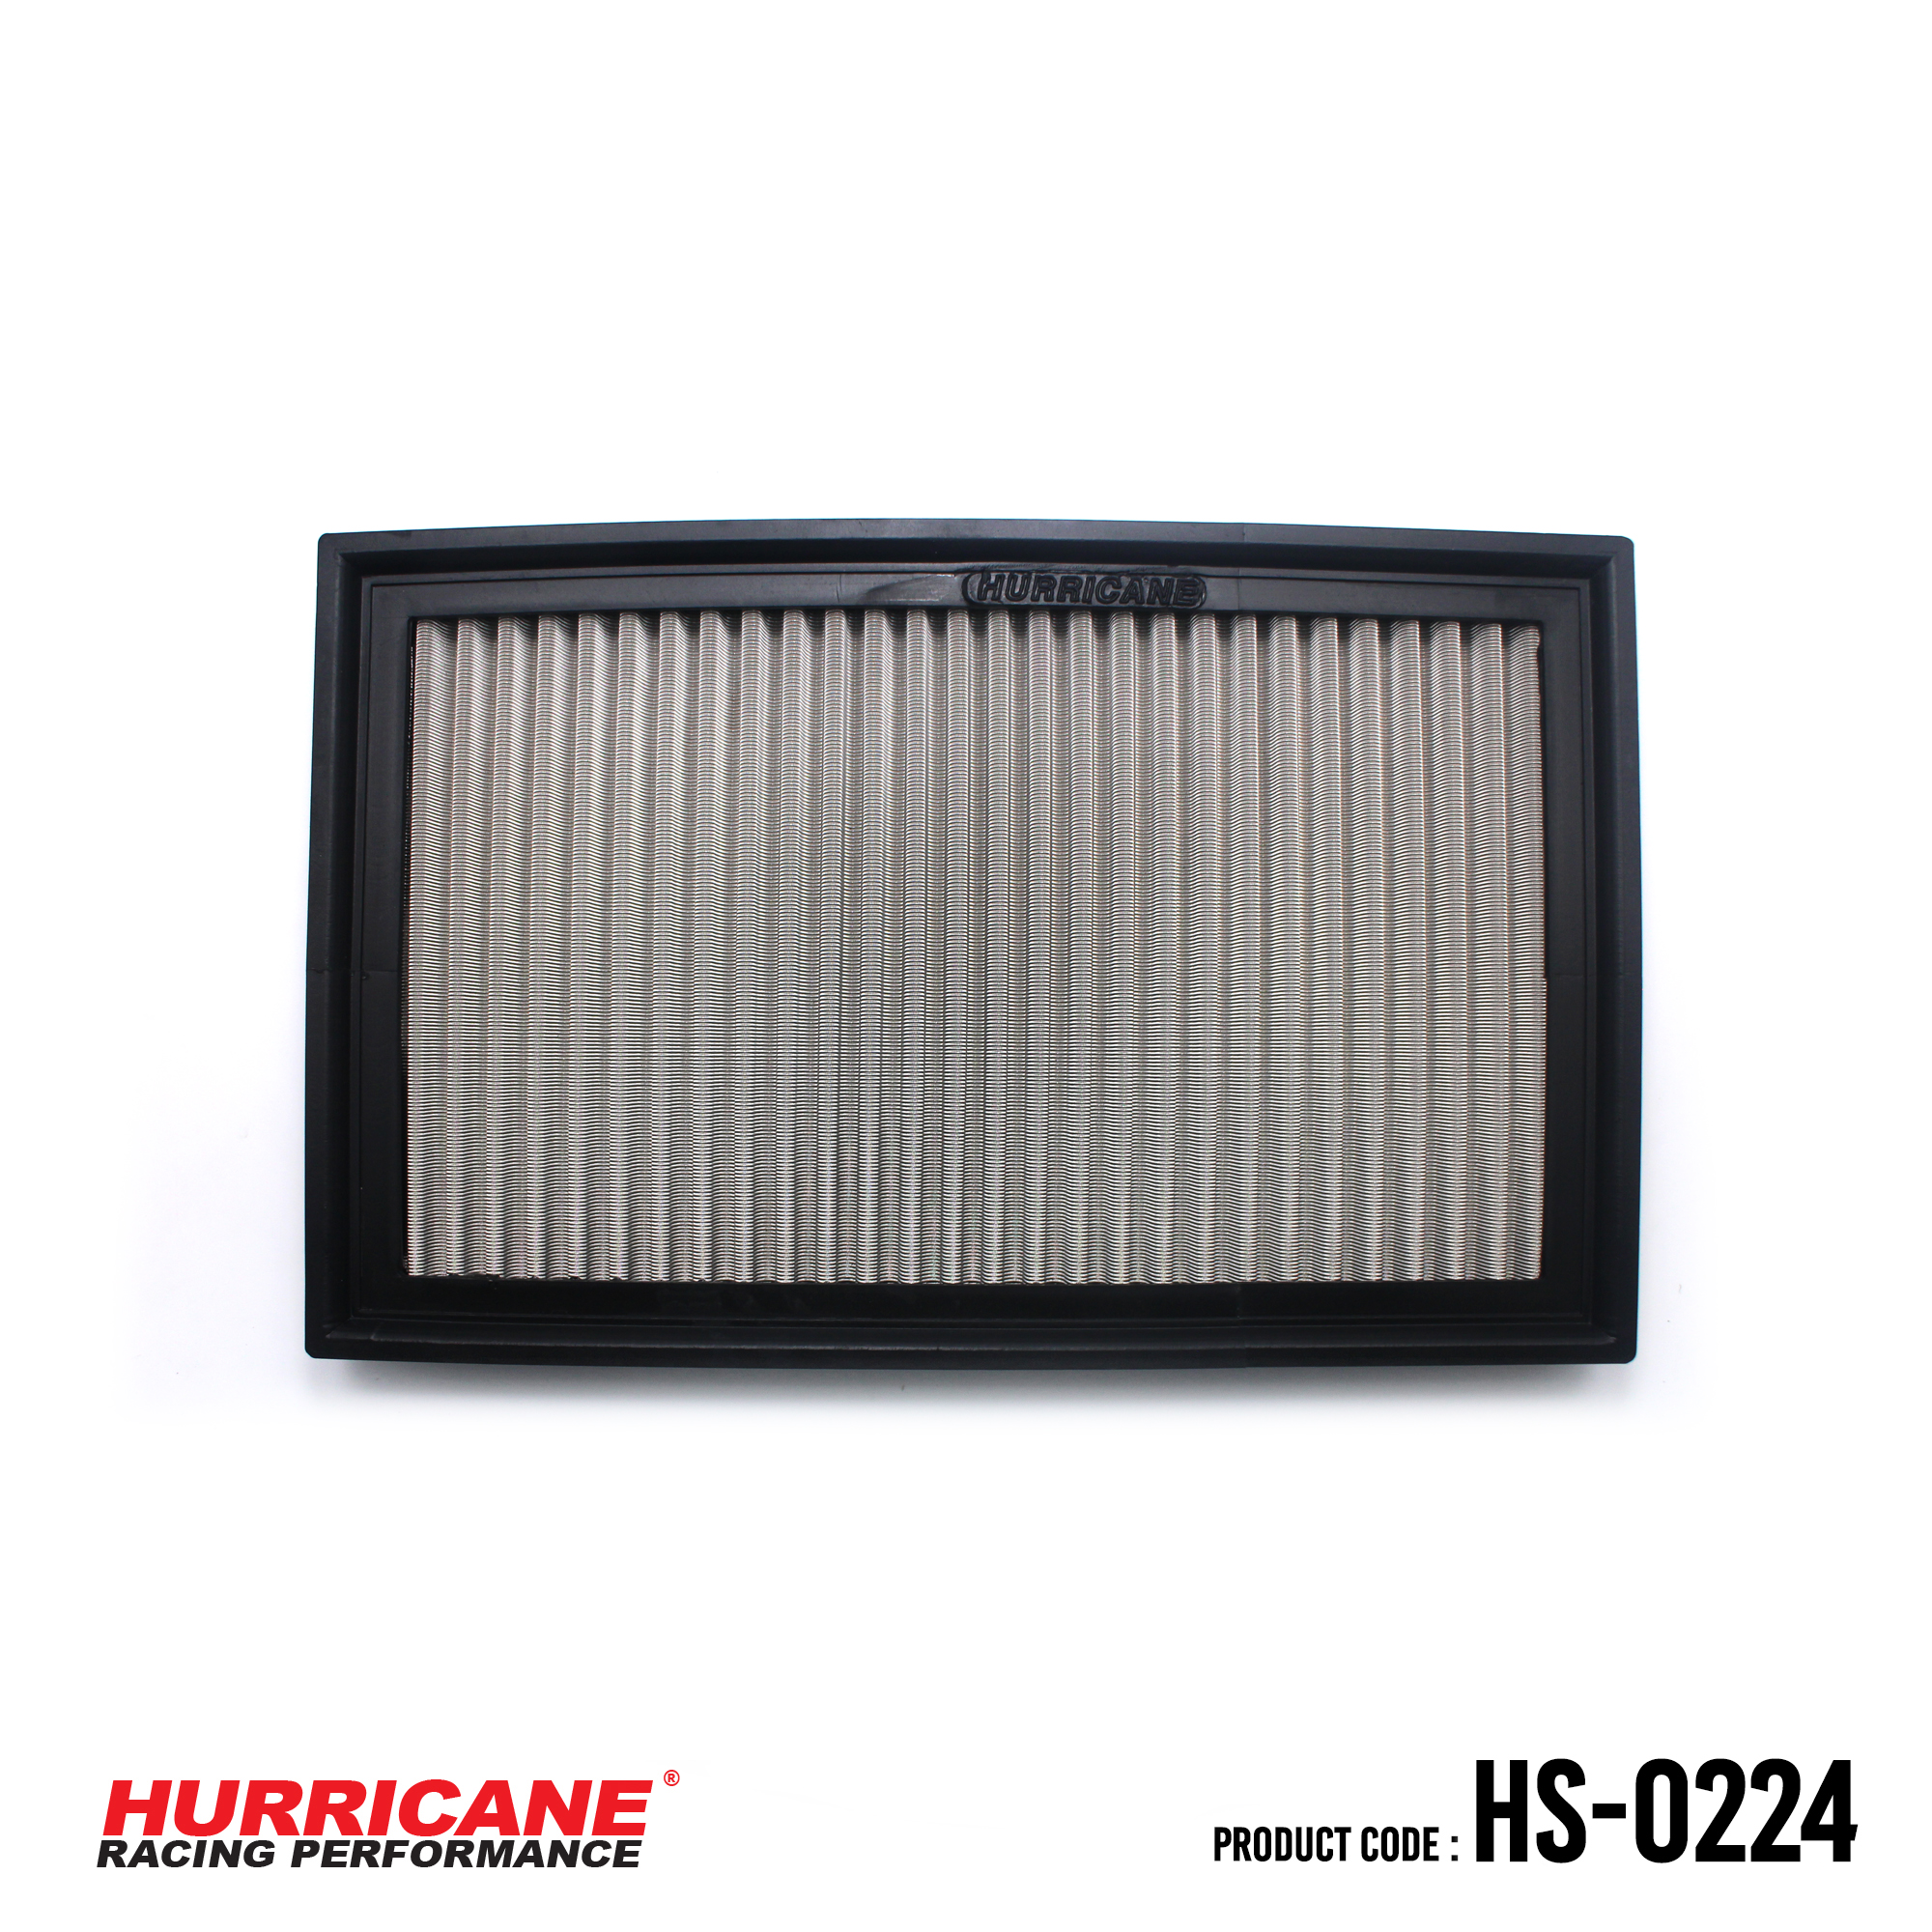 HURRICANE STAINLESS STEEL AIR FILTER FOR HS-0224 MercedesBenz